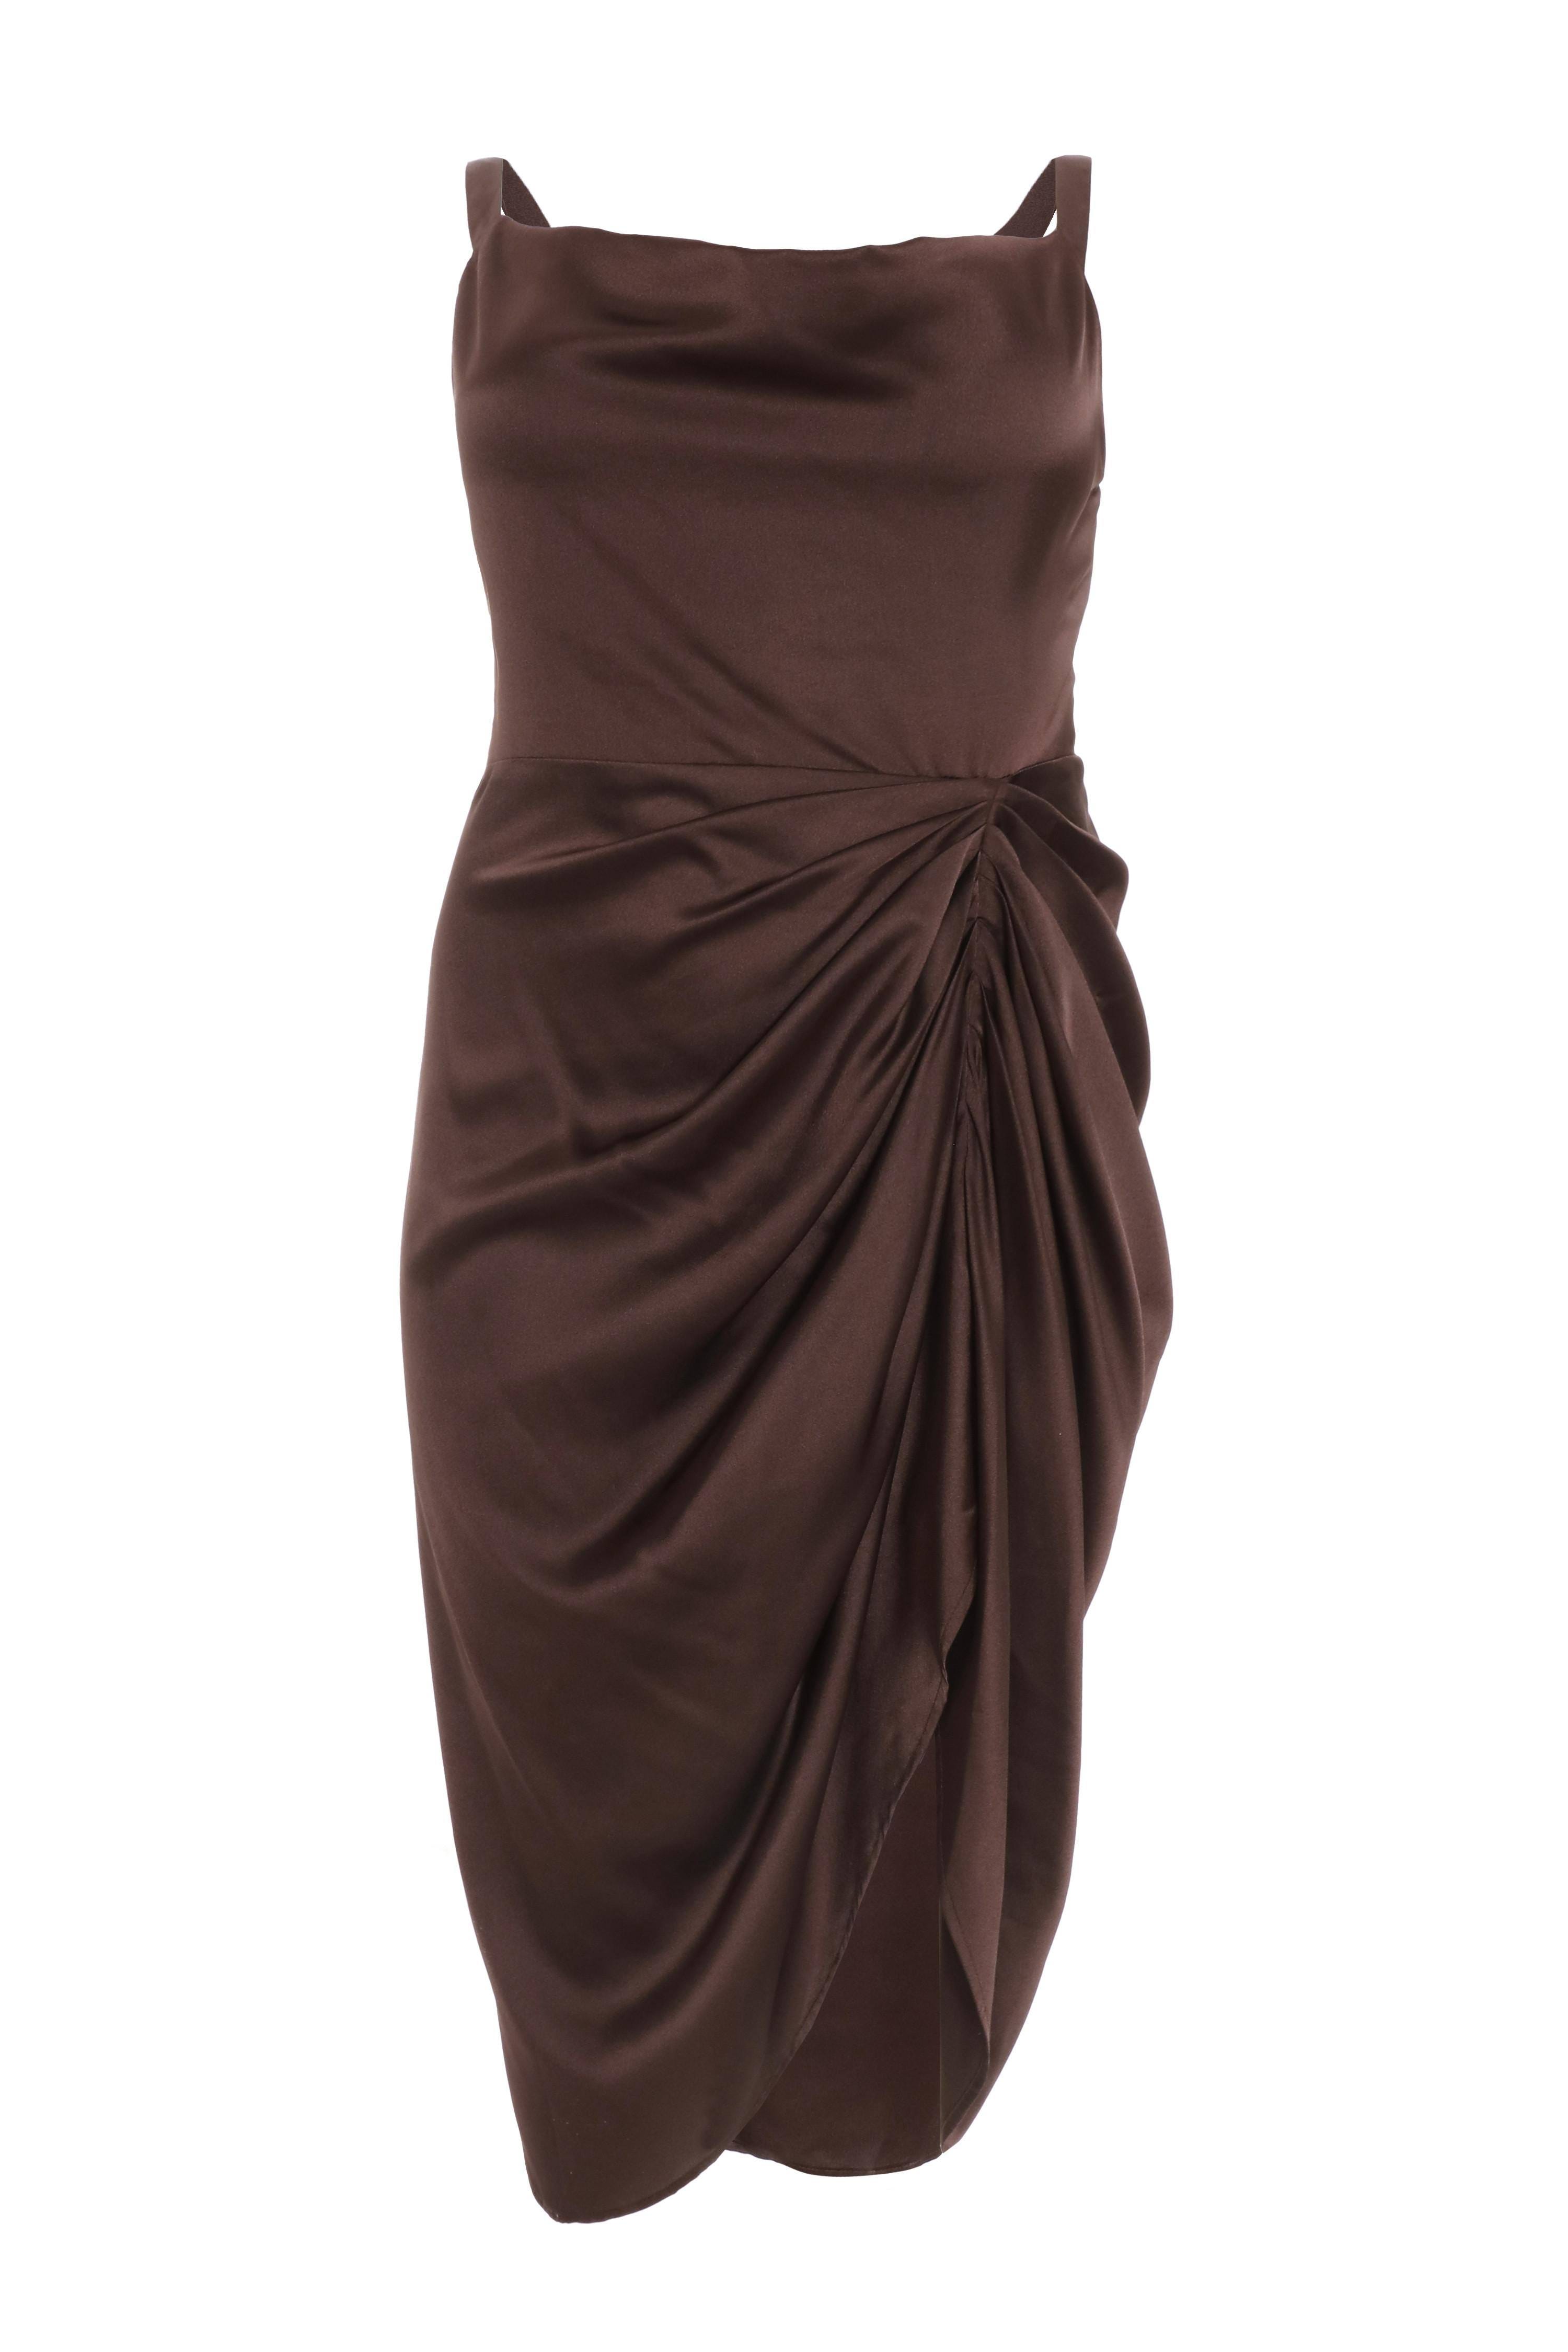 Quiz Curves - Chic Brown Satin Midi Dress with Cowl Neckline | Image